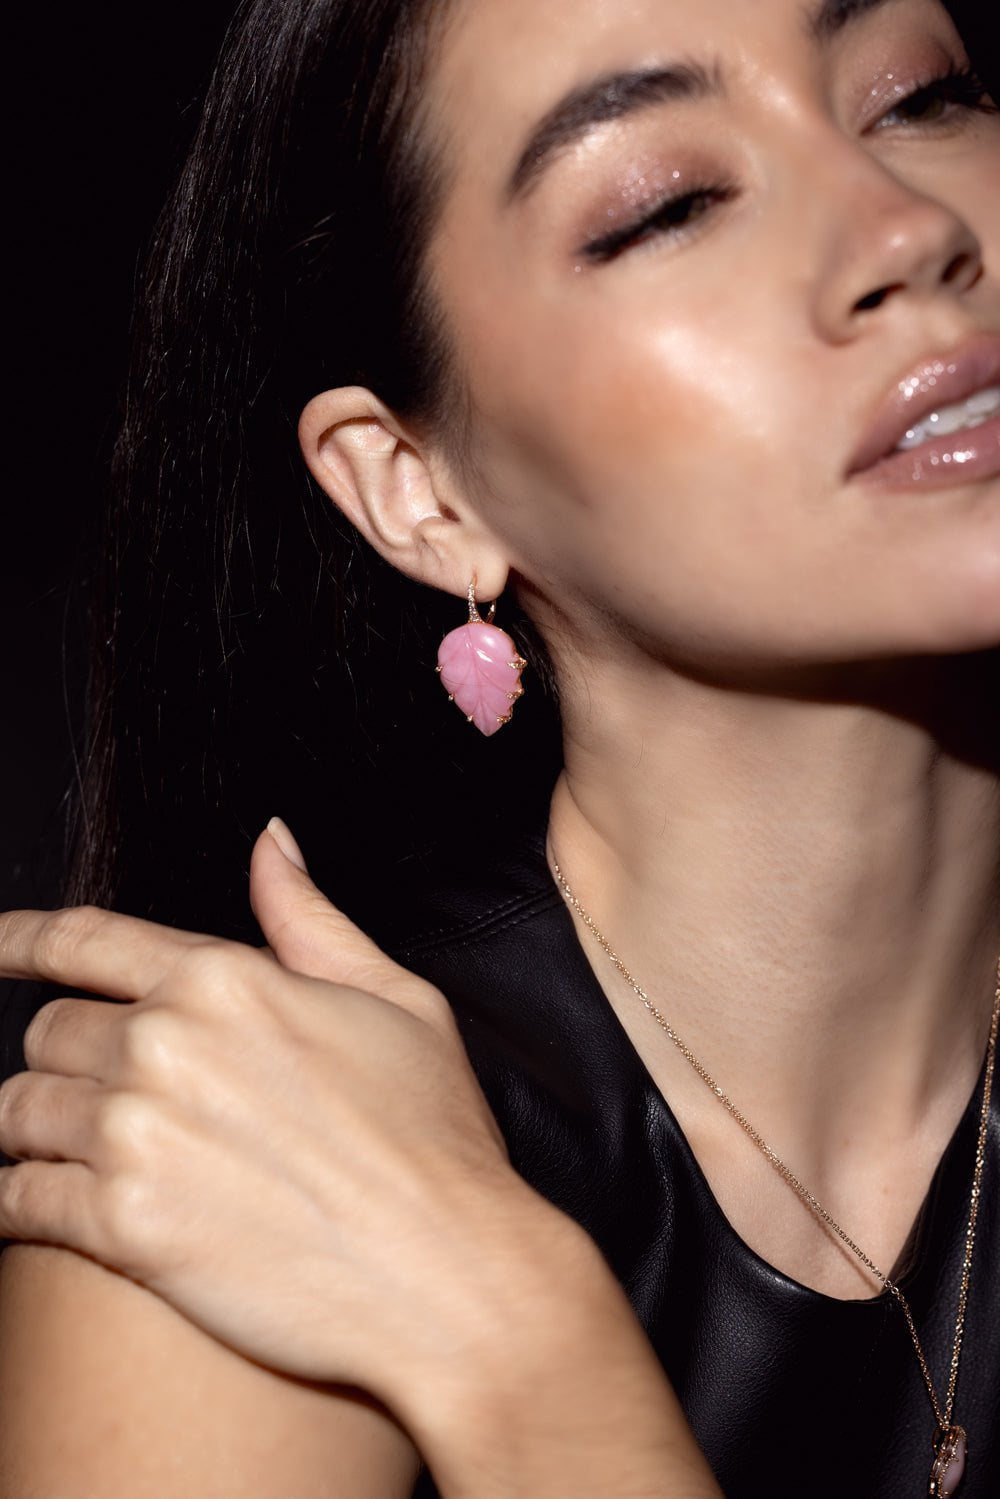 PIRANESI-Pink Opal Leaf Earrings-ROSE GOLD